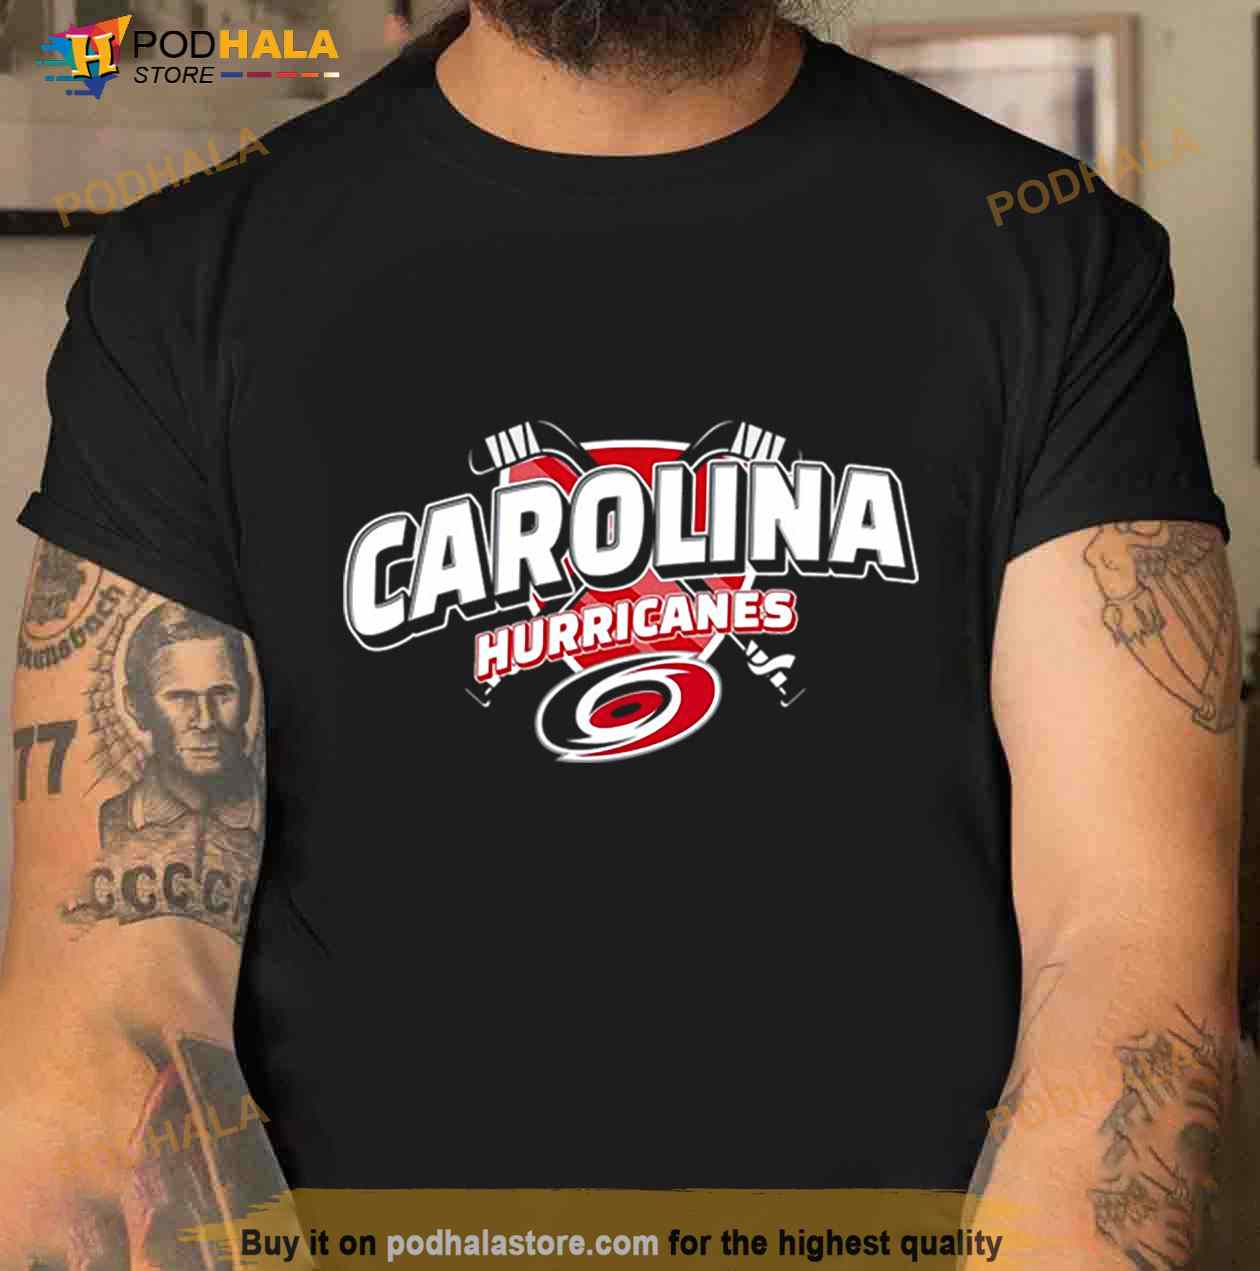 Carolina Hurricanes Sweatshirt NHL Hockey - Anynee